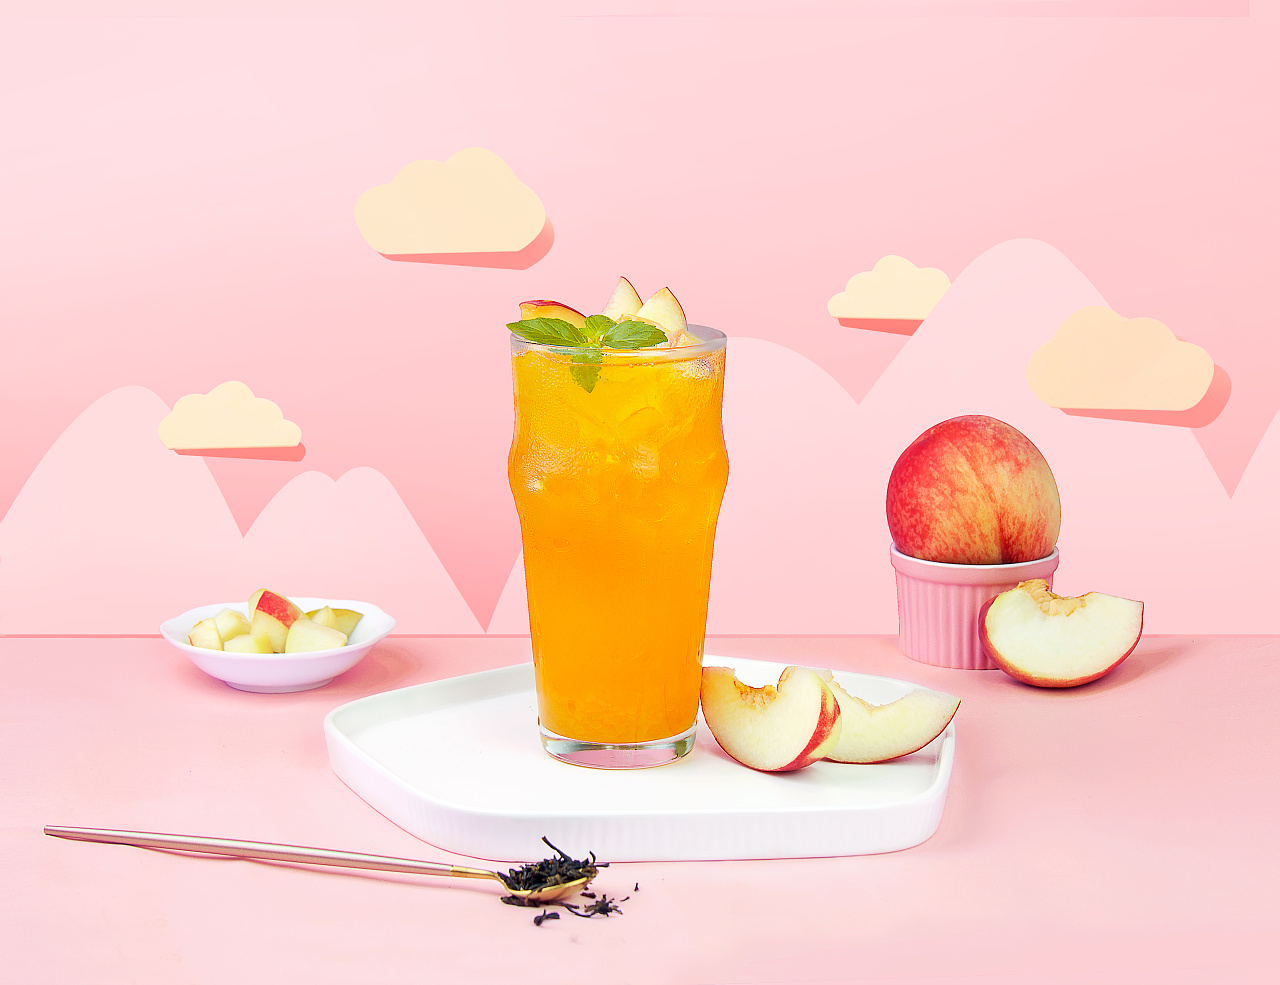 【草莓柠檬水】比极光还美草莓柠檬水，满足你的少女心！_哔哩哔哩 (゜-゜)つロ 干杯~-bilibili